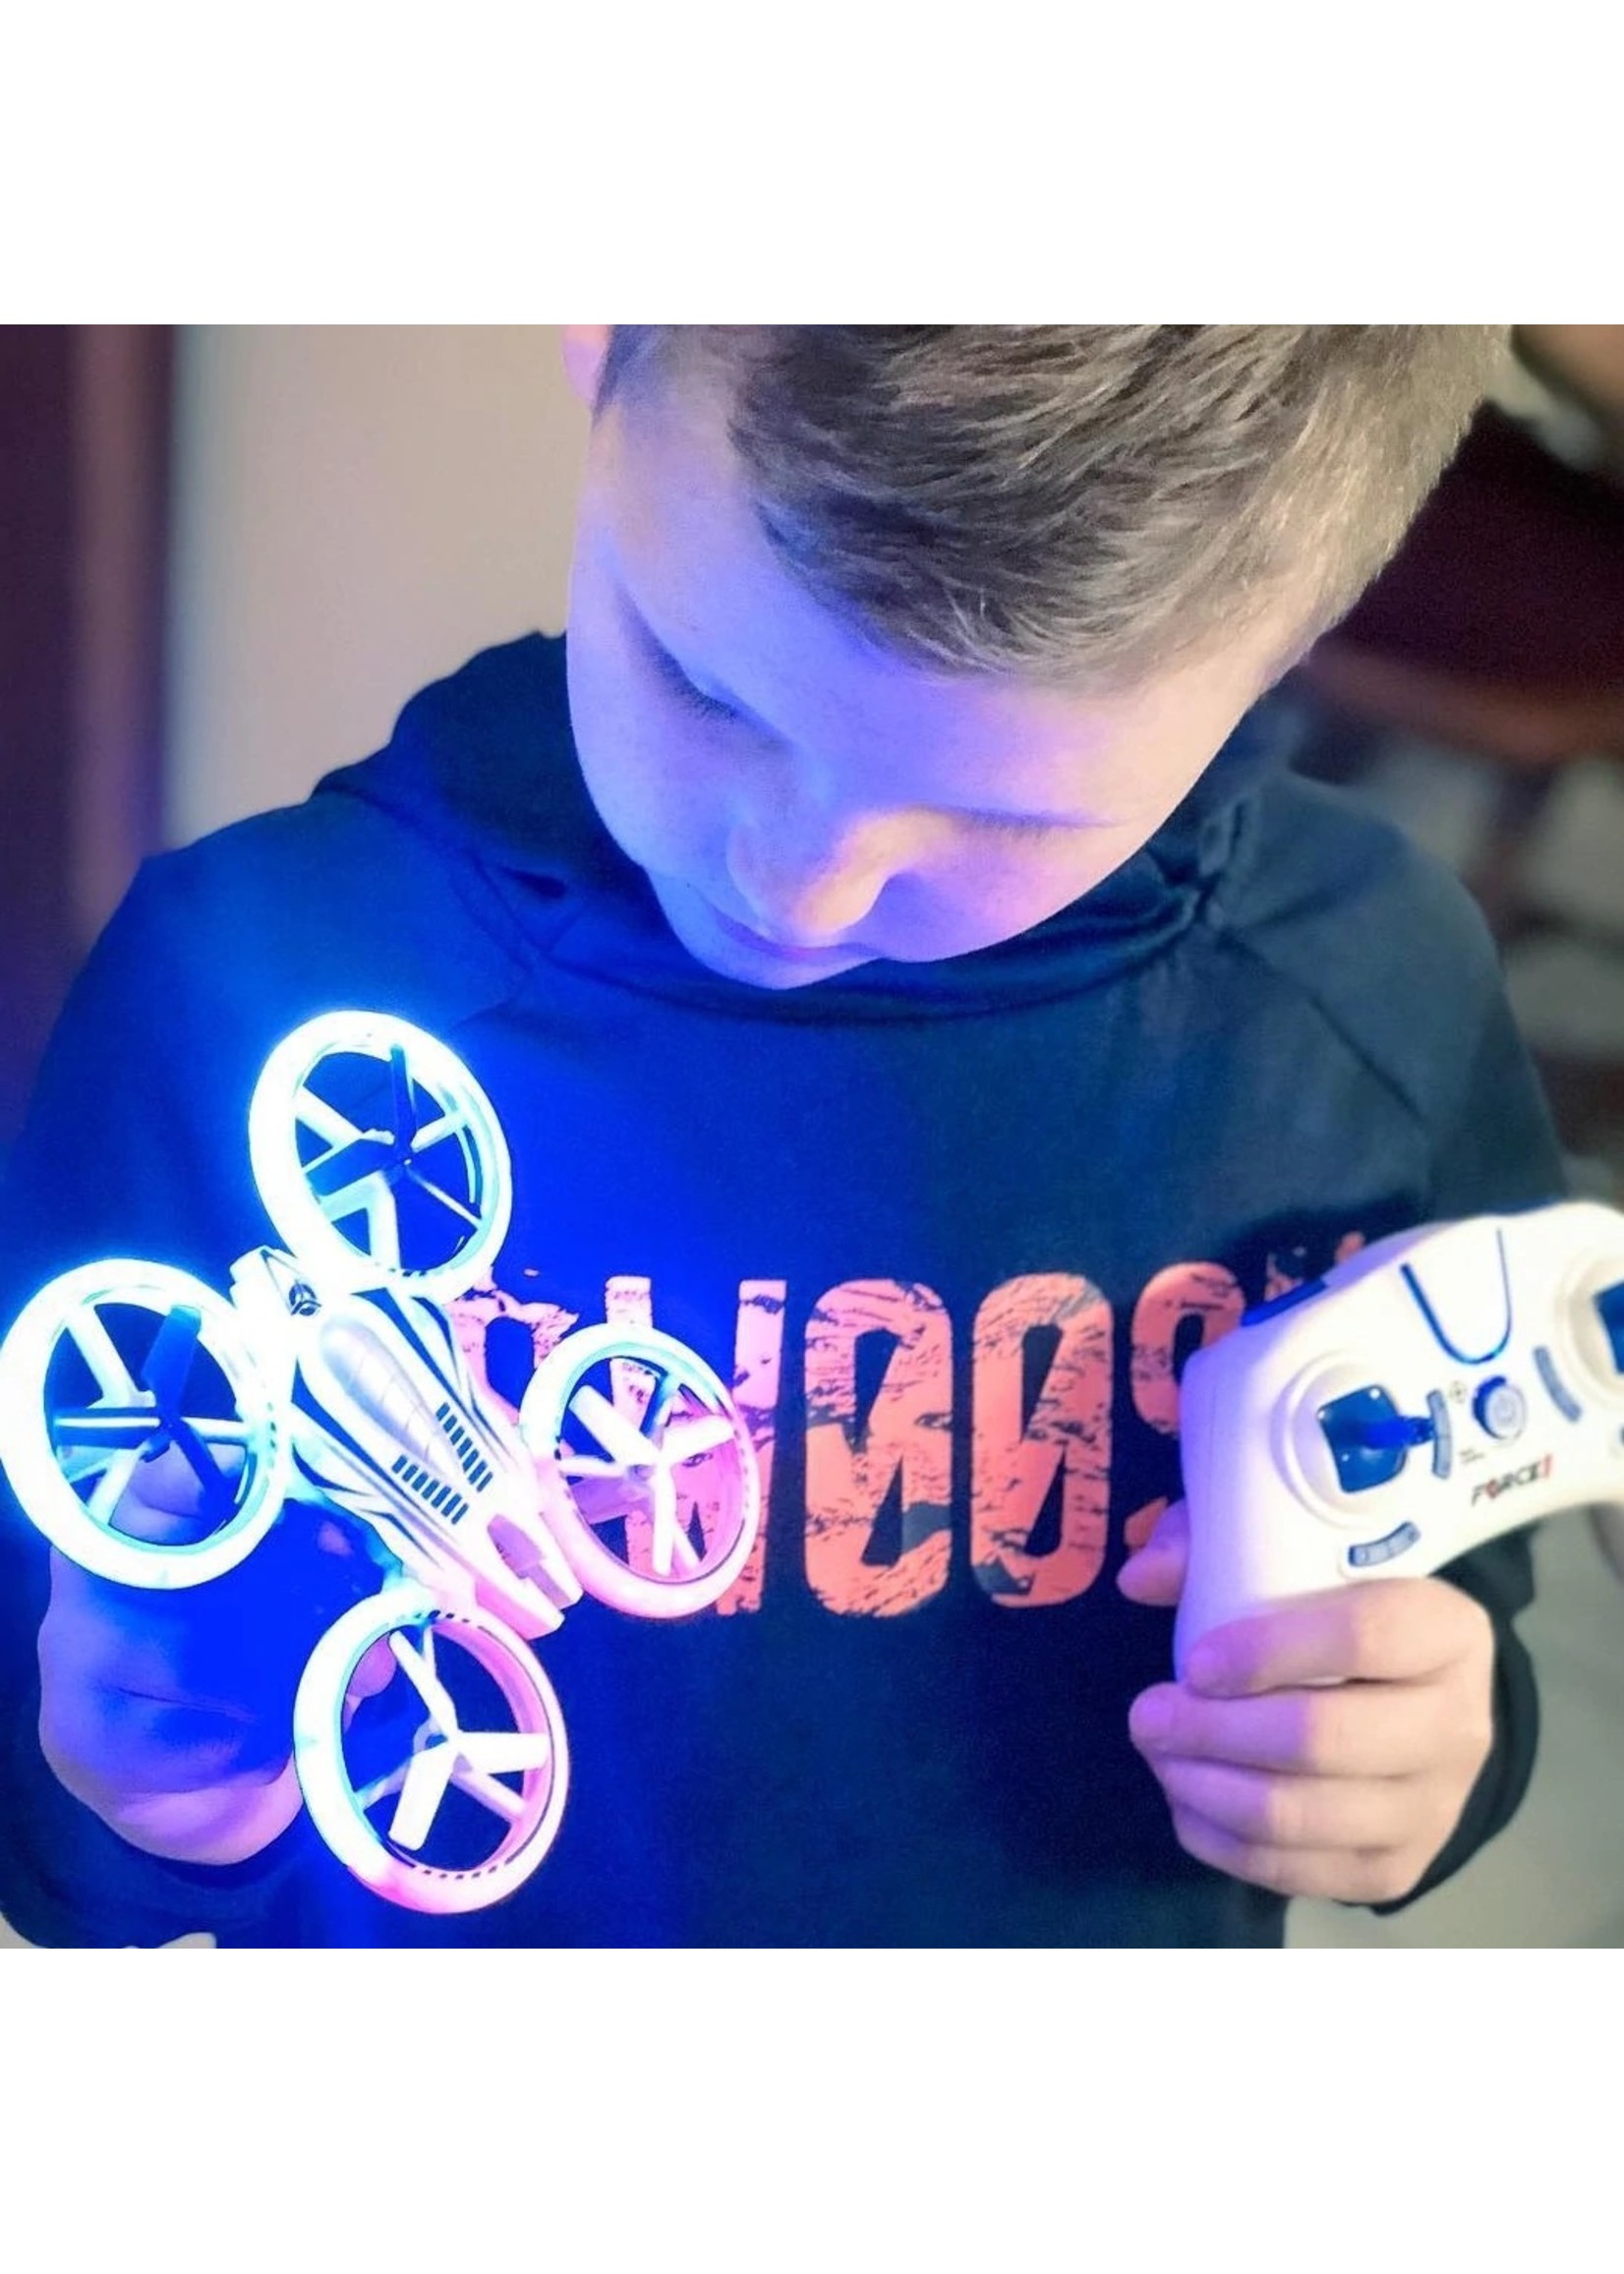 USA Toyz UFO 4000 LED Drone